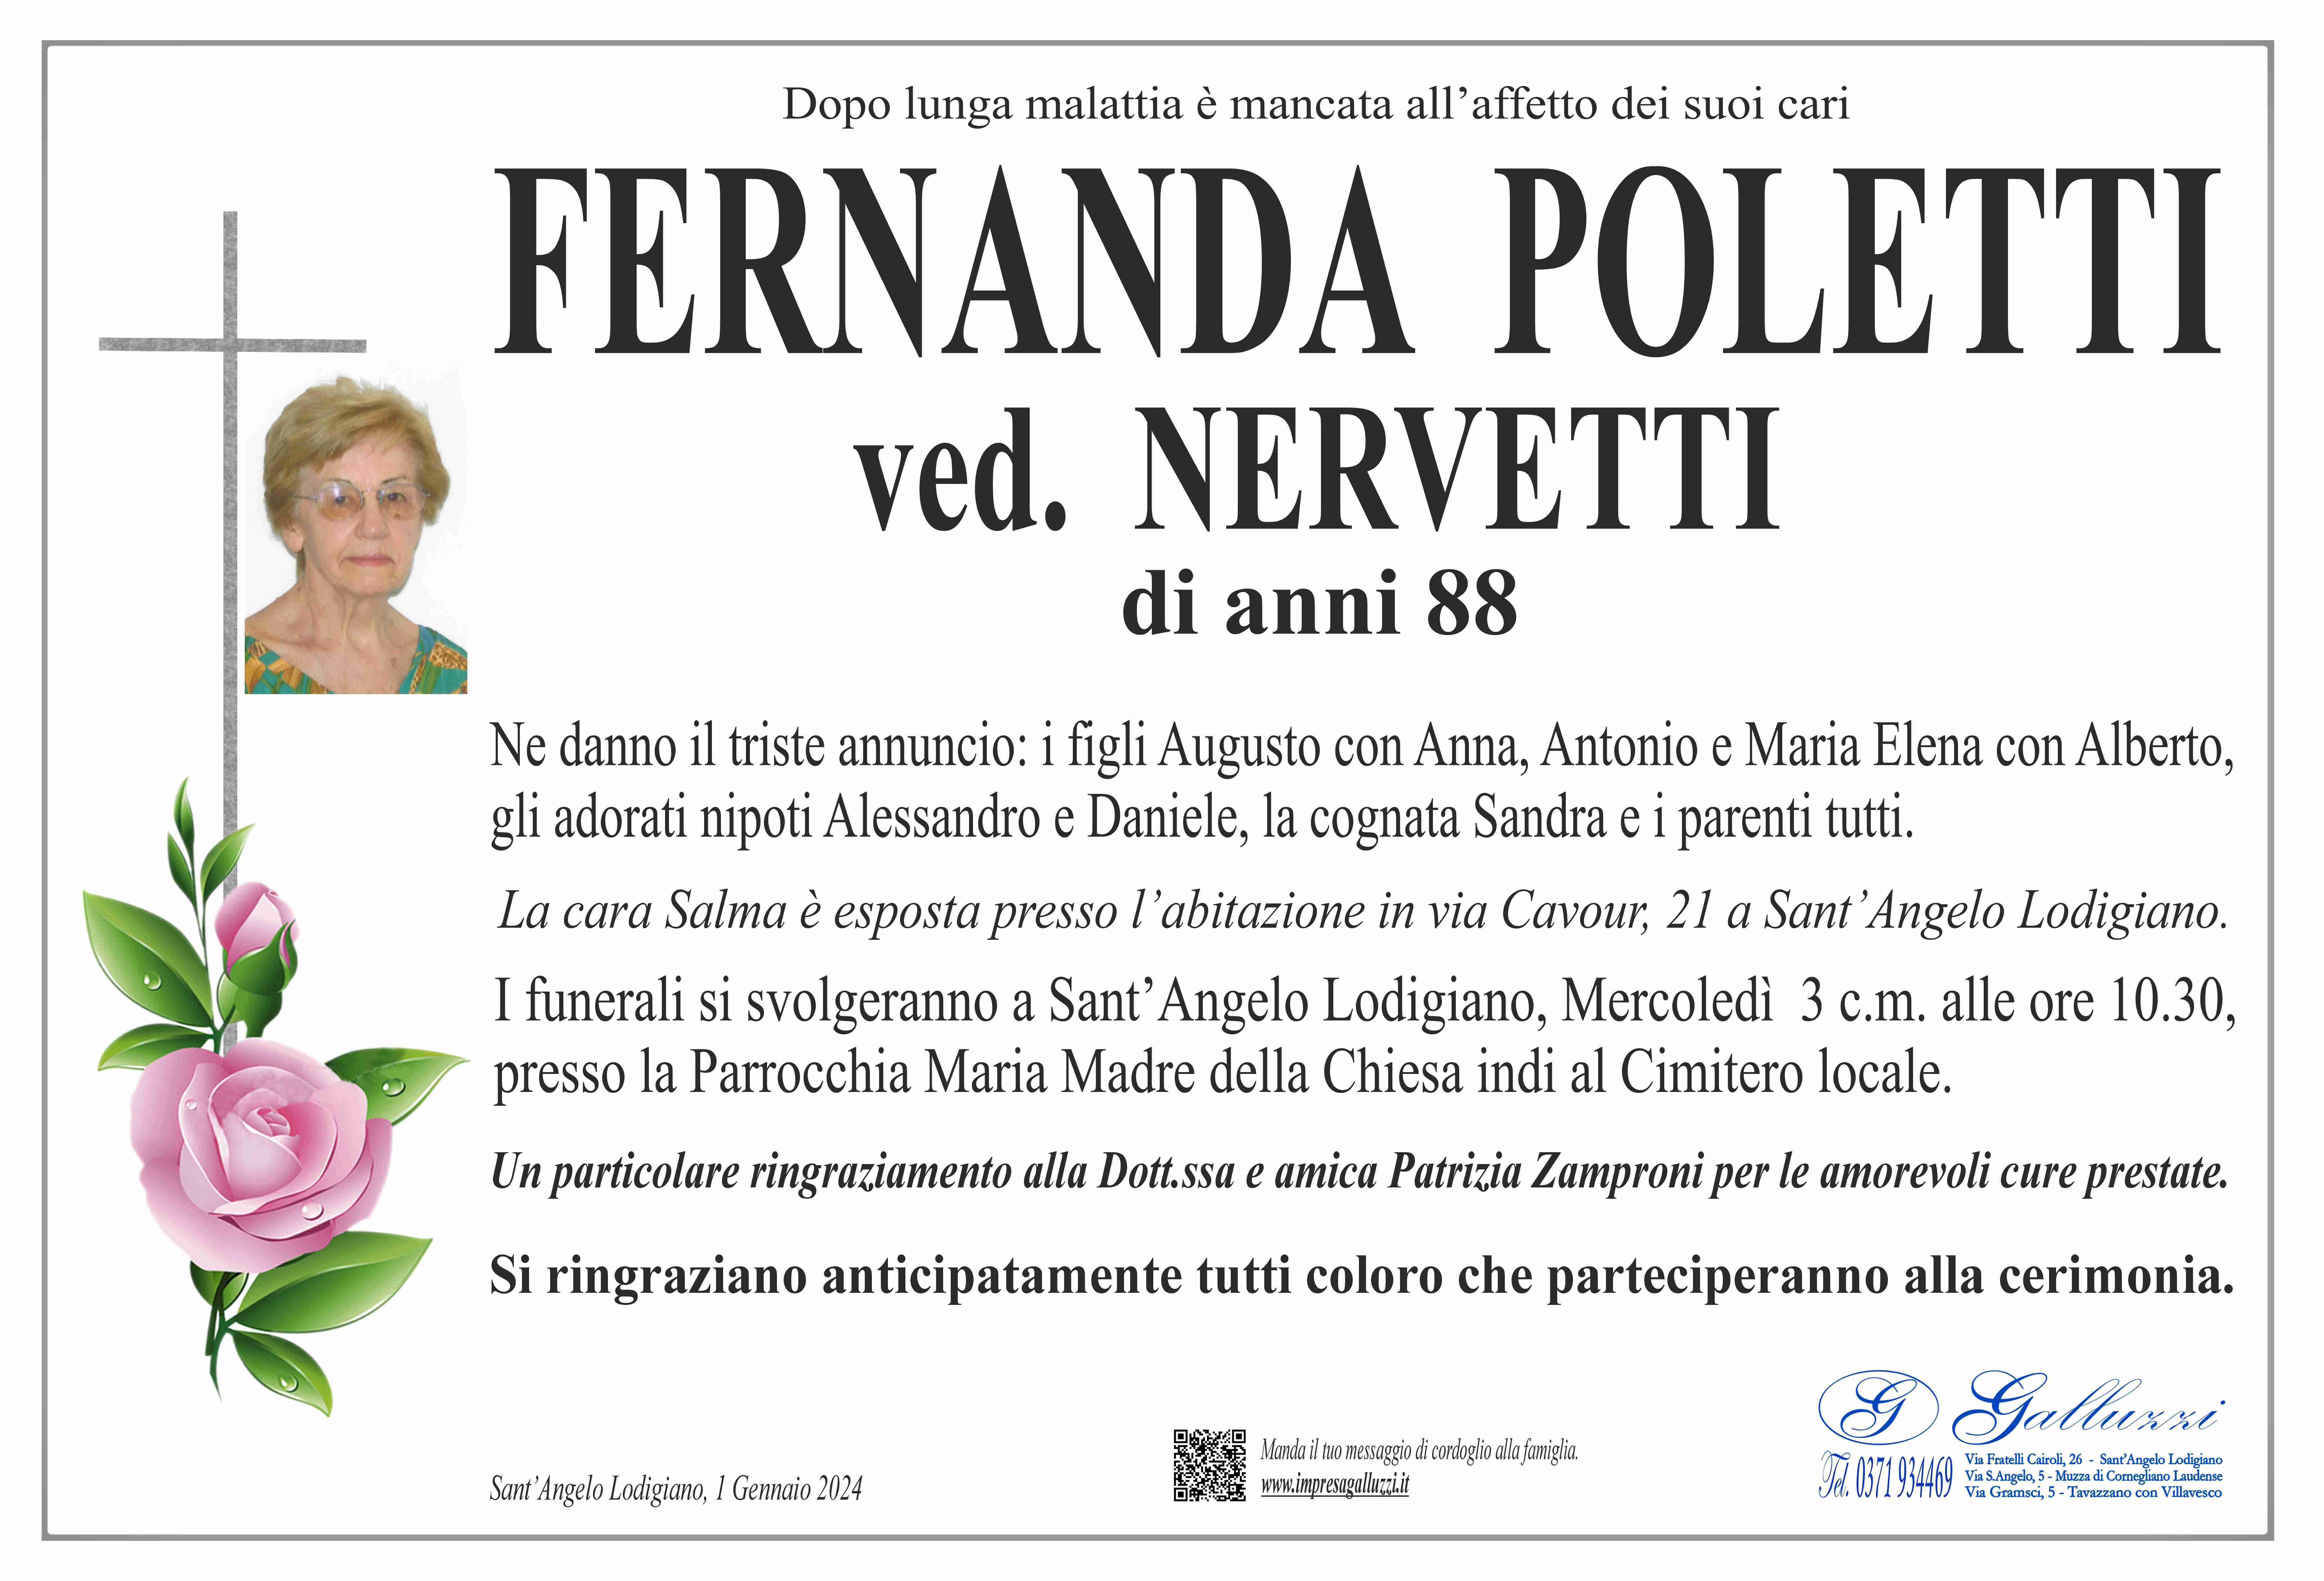 Fernanda Poletti